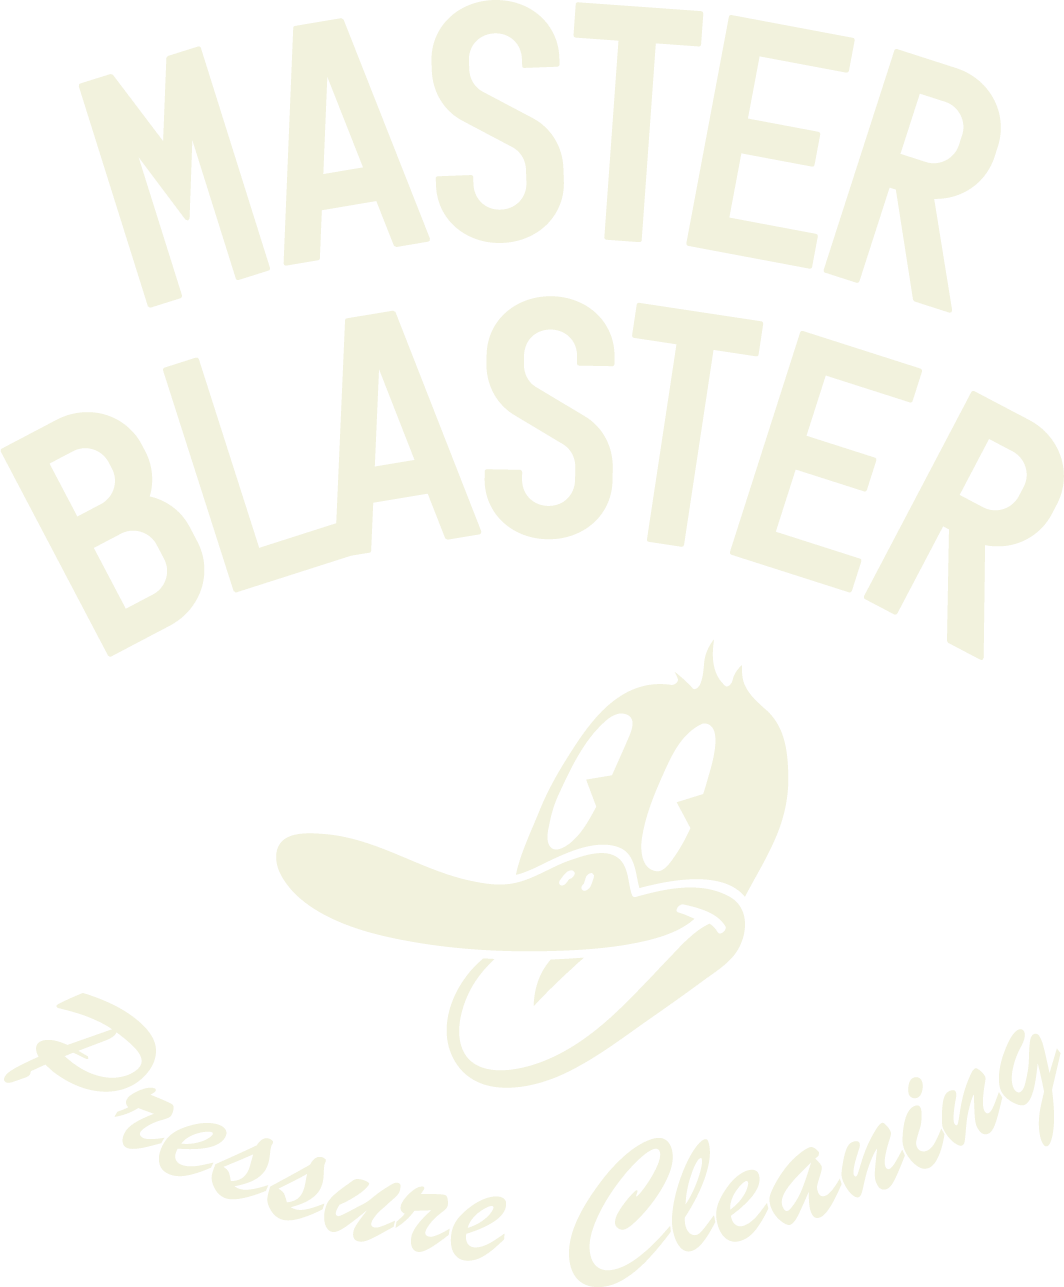 Master Blaster Reduced Mascot Reversed